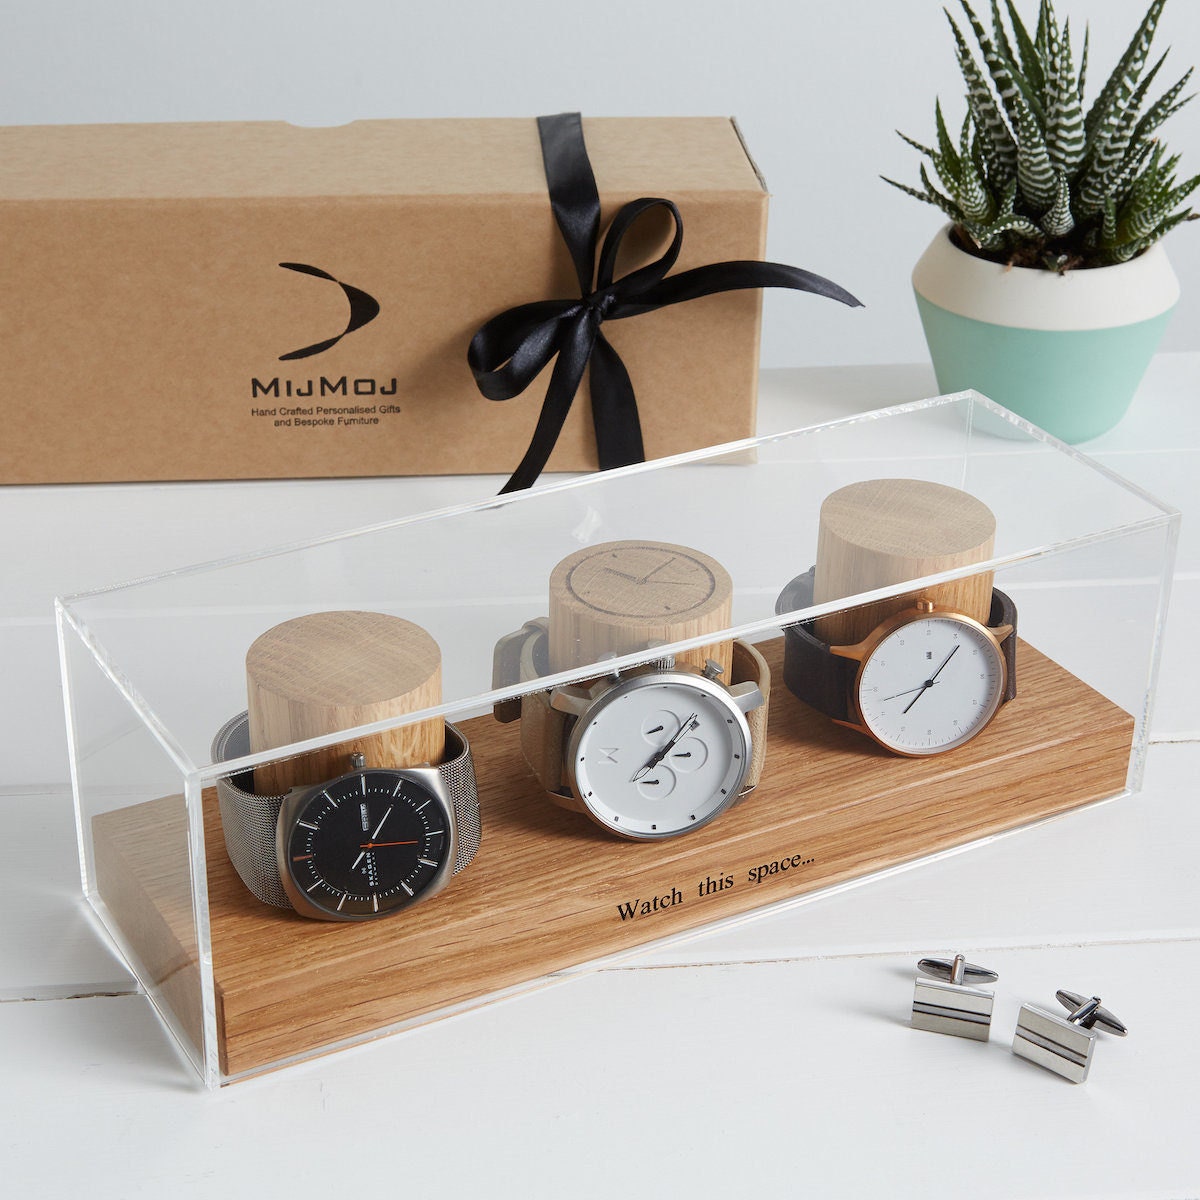 Personalized watch box with acrylic cover from MijMoj